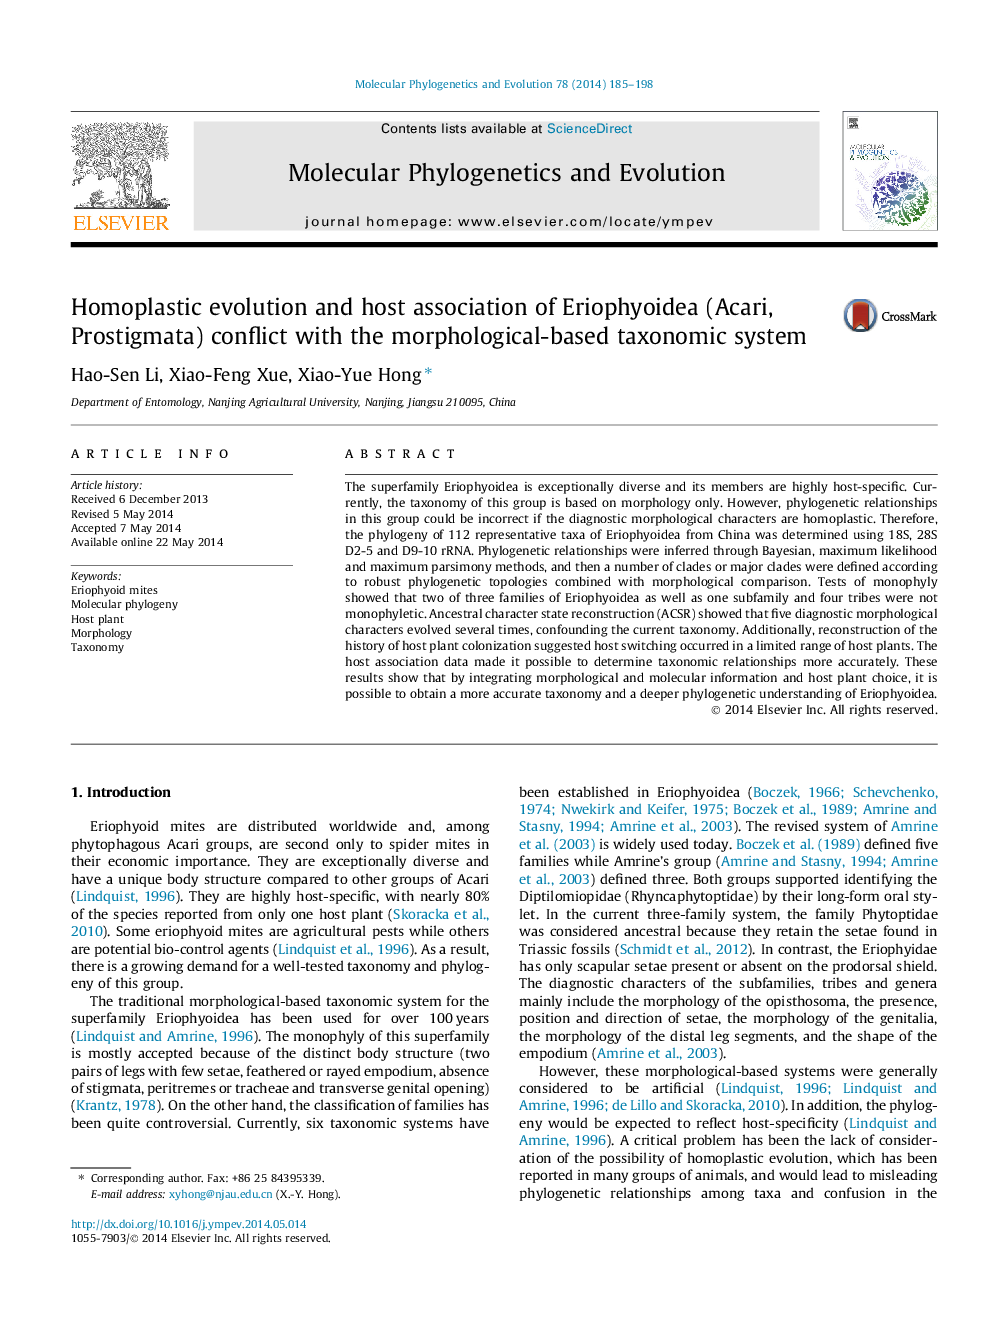 Homoplastic evolution and host association of Eriophyoidea (Acari, Prostigmata) conflict with the morphological-based taxonomic system